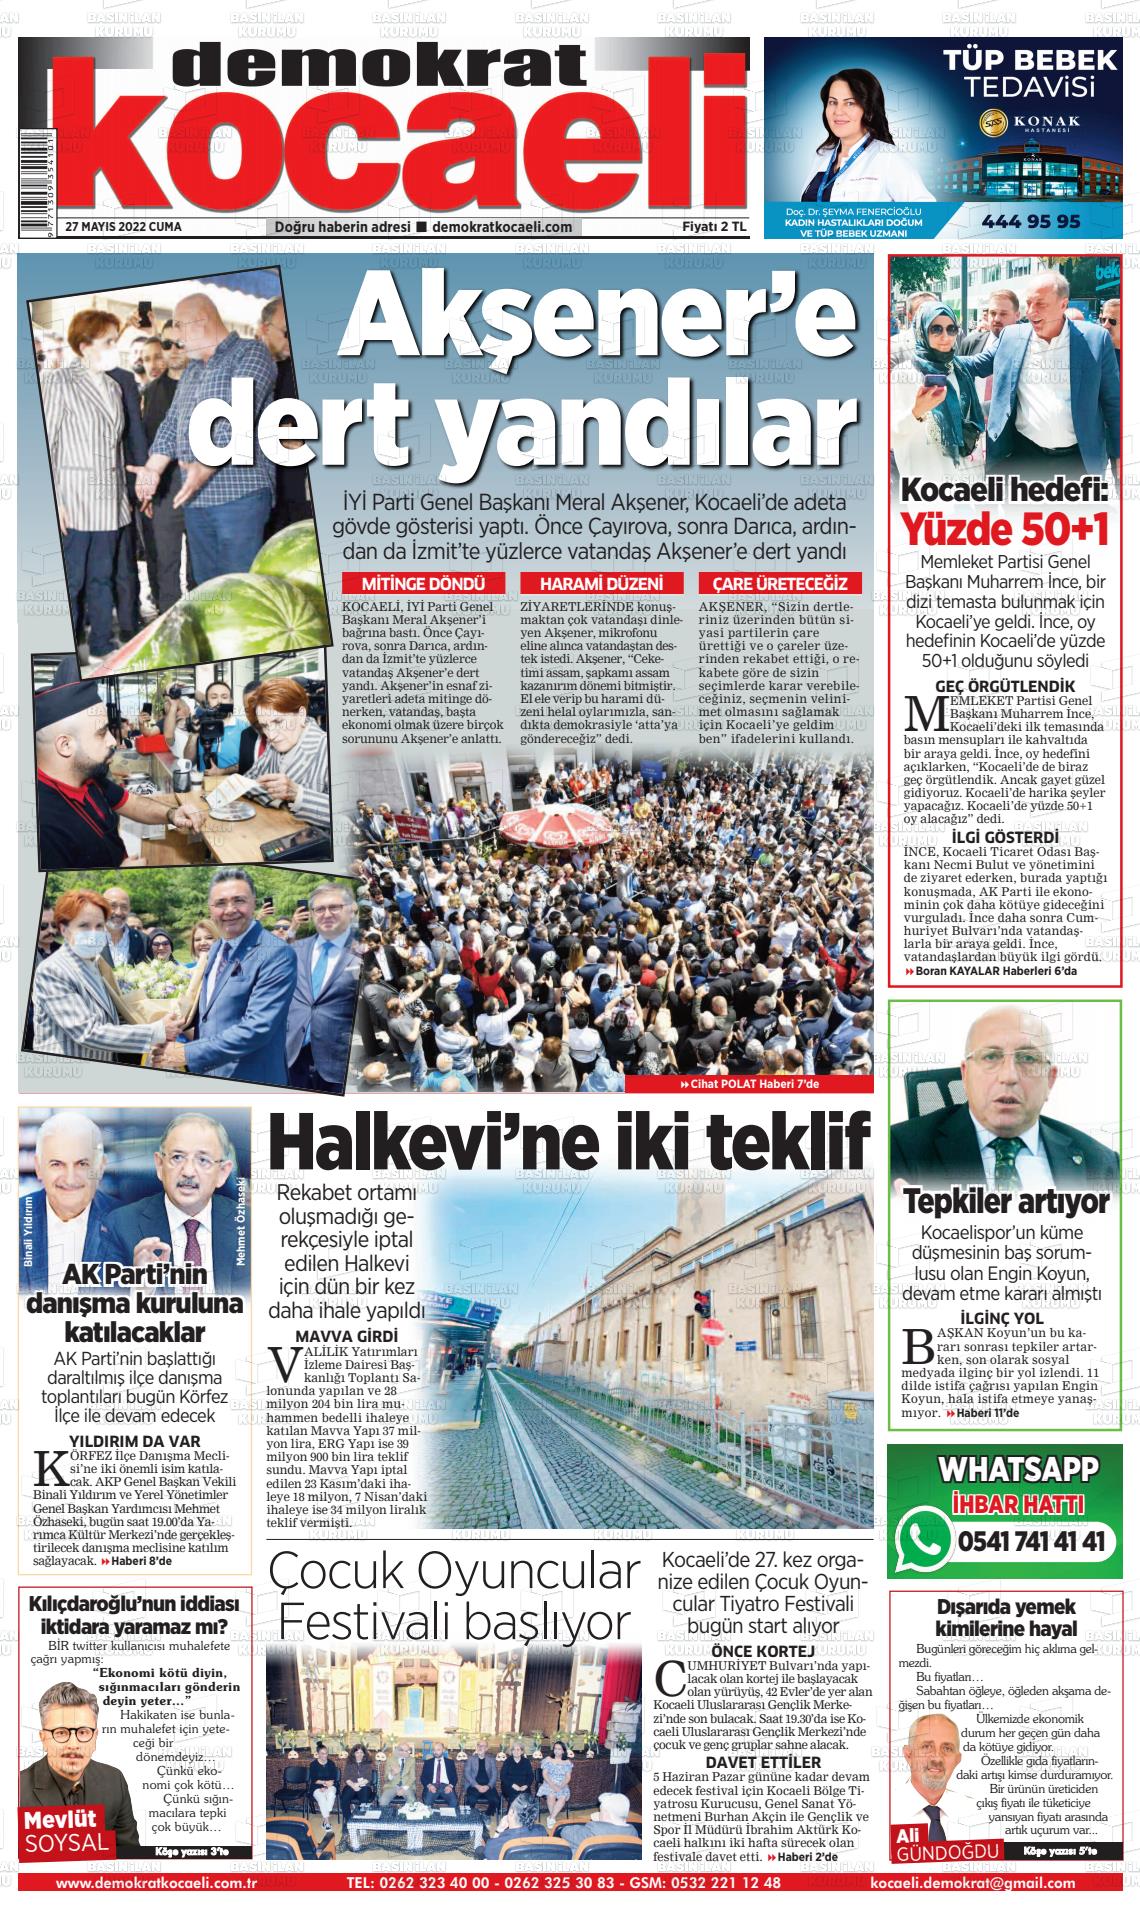 27 Mayıs 2022 Demokrat Kocaeli Gazete Manşeti